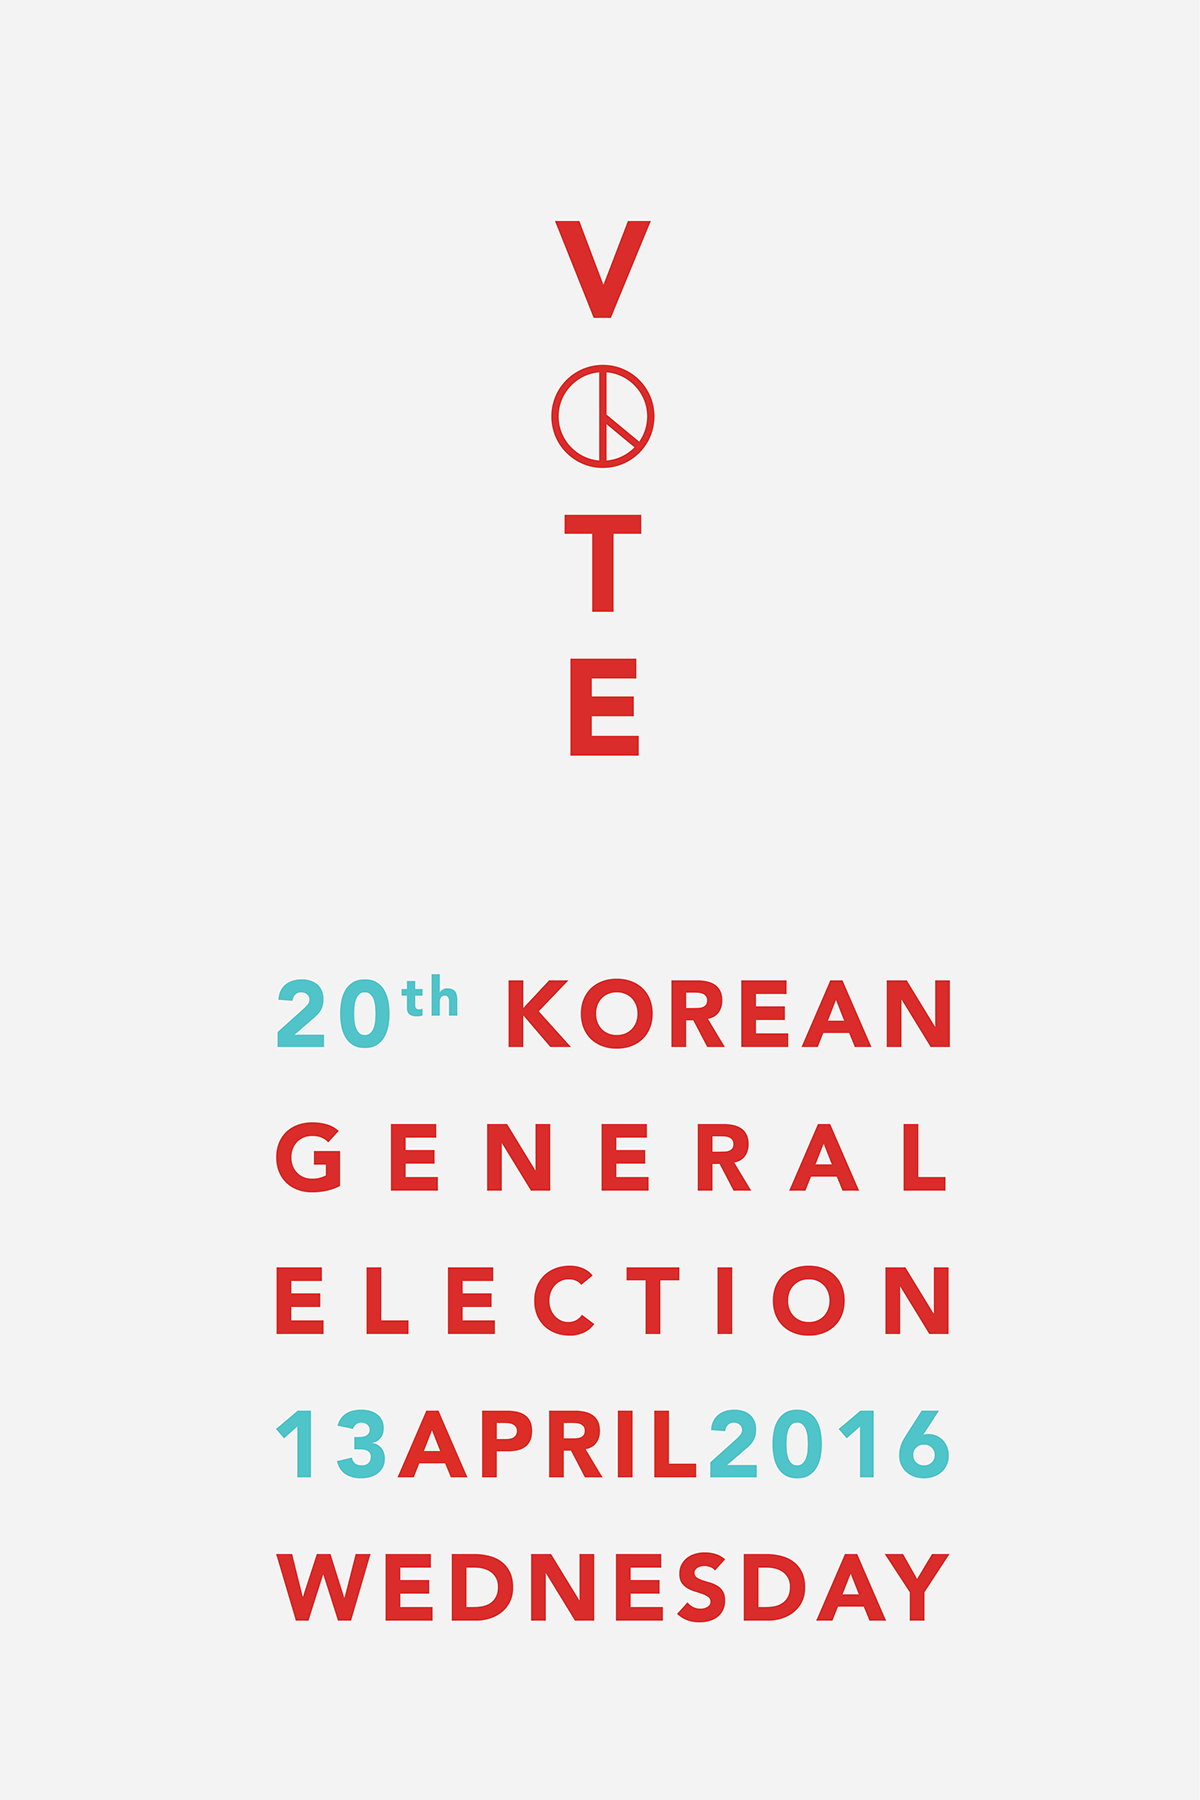 Adobe Portfolio vote poster Korea General Election